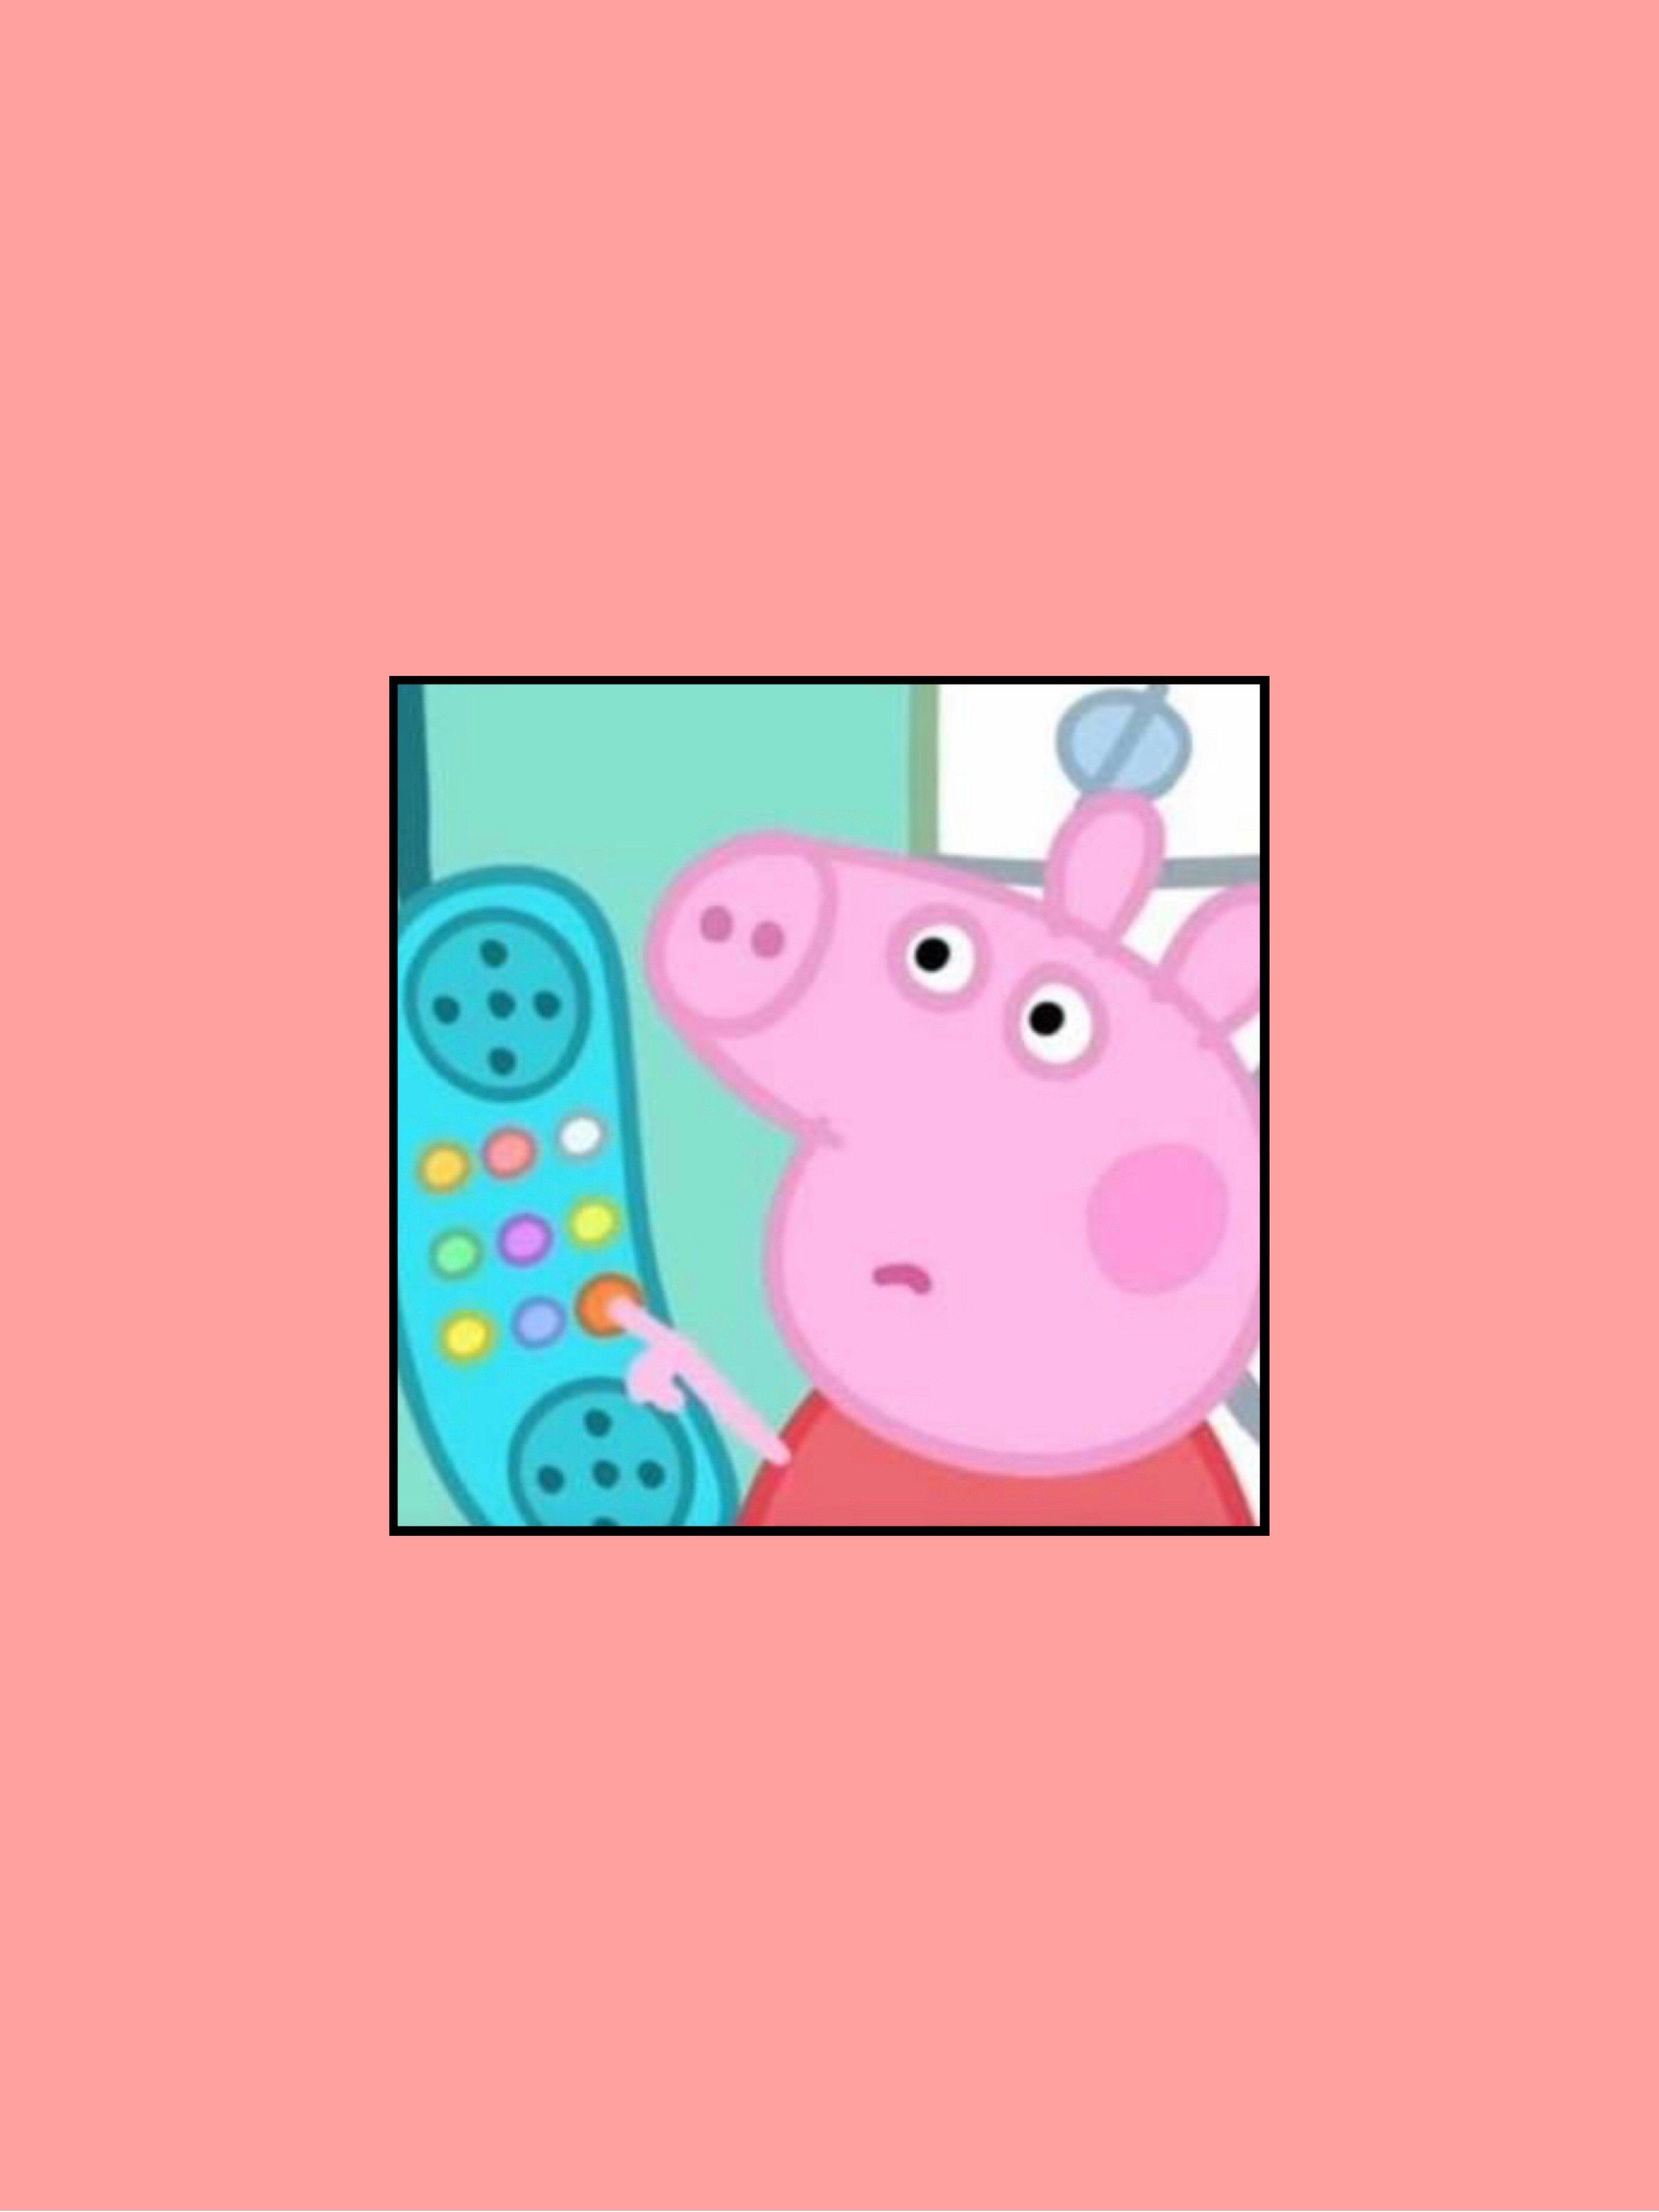 Peppa Pig Meme Wallpaper Free Peppa Pig Meme Background